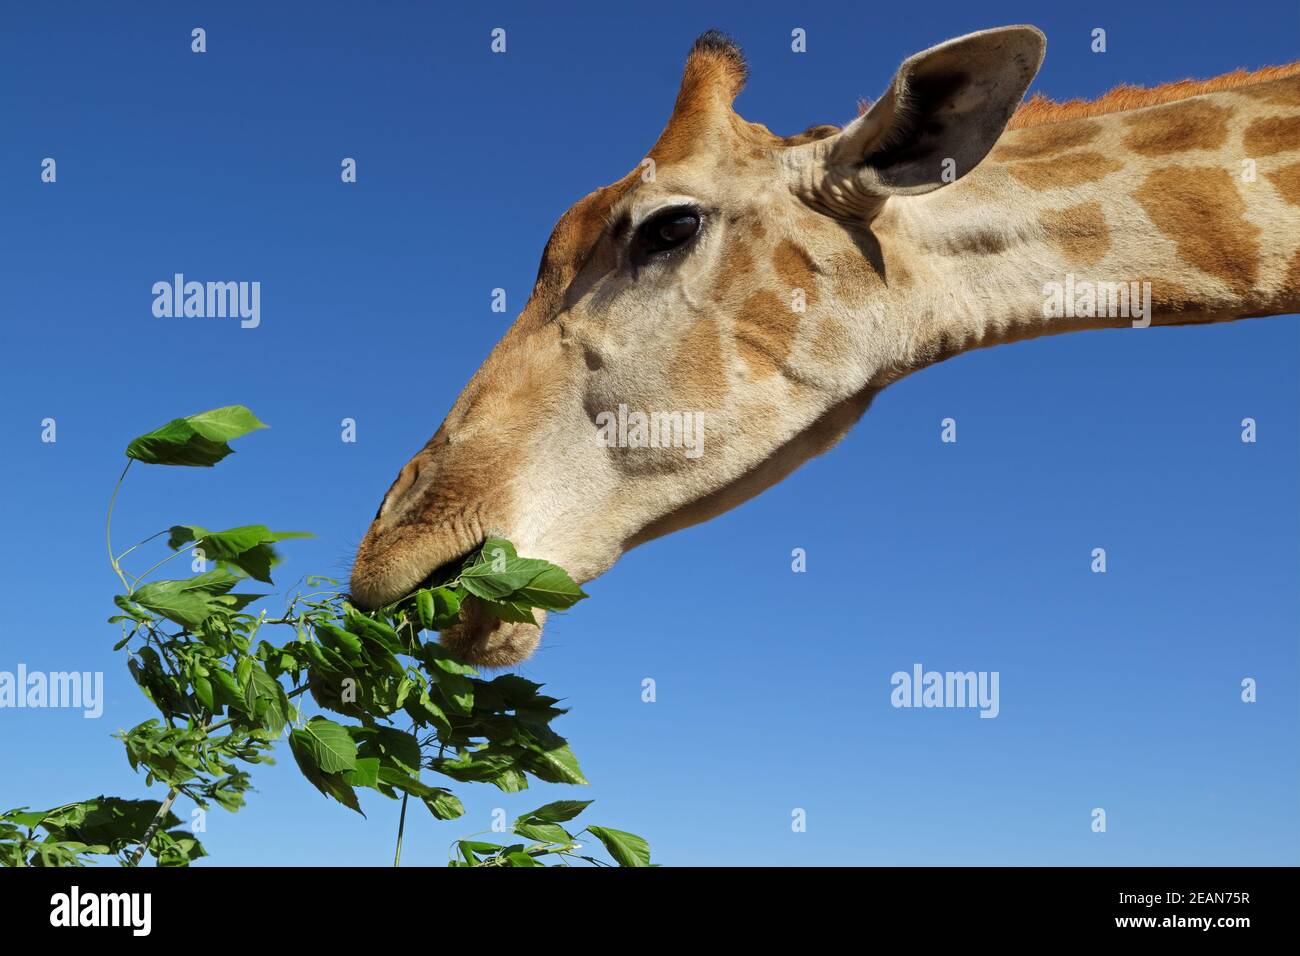 Giraffe feeding on leaves Stock Photo